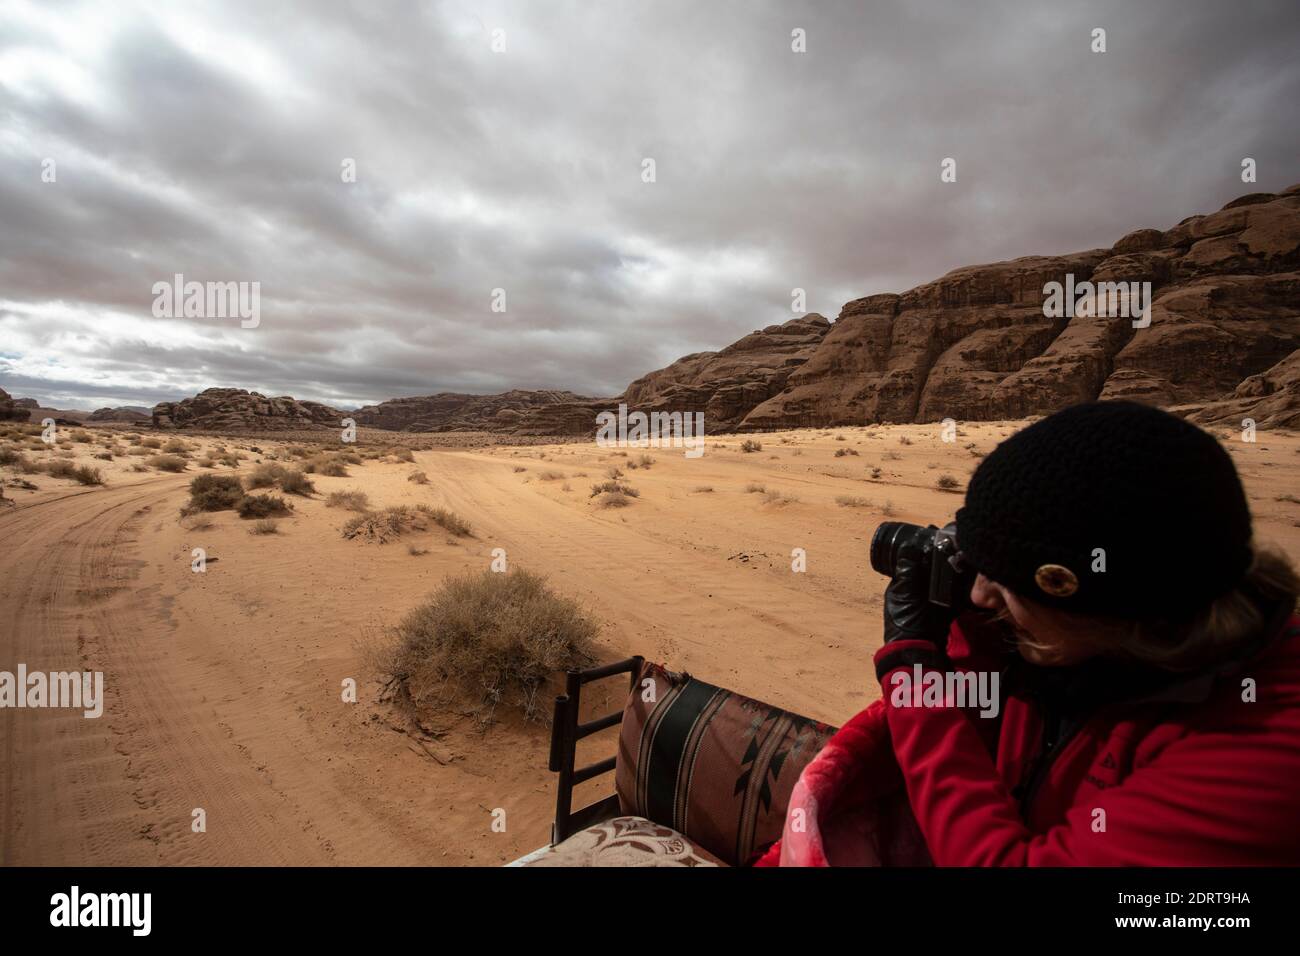 Turist in Wadi Rum Desert, Jordan, feb 2020, just a few weeks before the global lockdown due to the pandemic Stock Photo